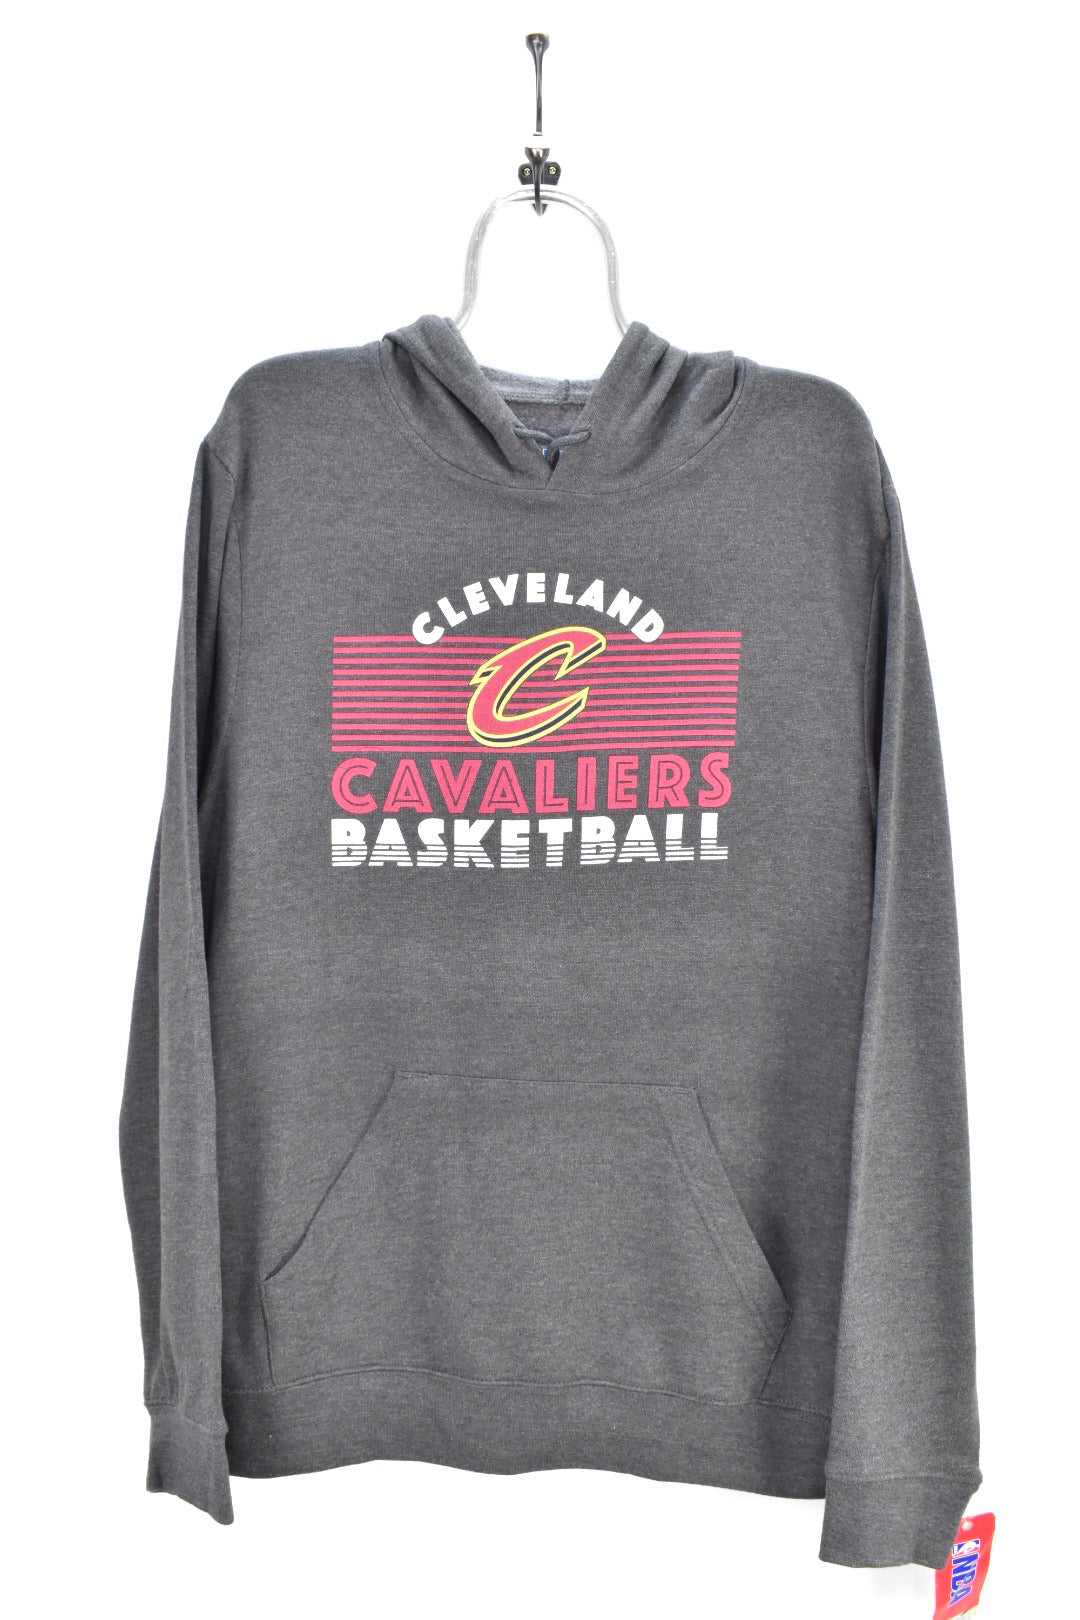 Modern Cleveland Cavillers hoodie, NBA grey graphic sweatshirt